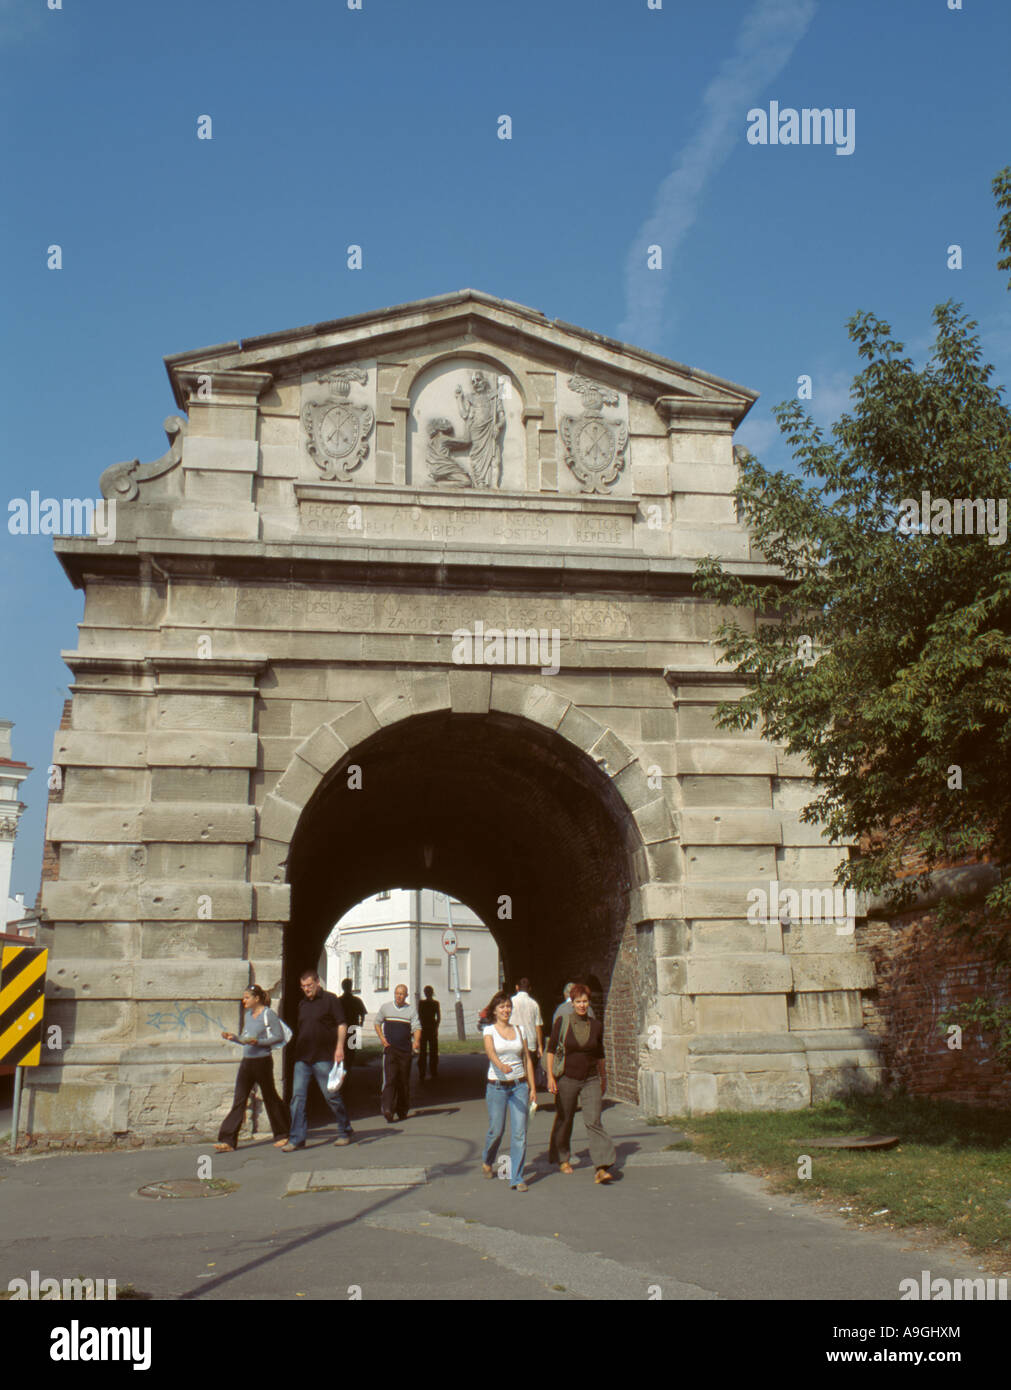 Brama Lwowska (Lviv Gate), Zamosc, Malopolska, Poland. One of the three original gateways into the city. Stock Photo